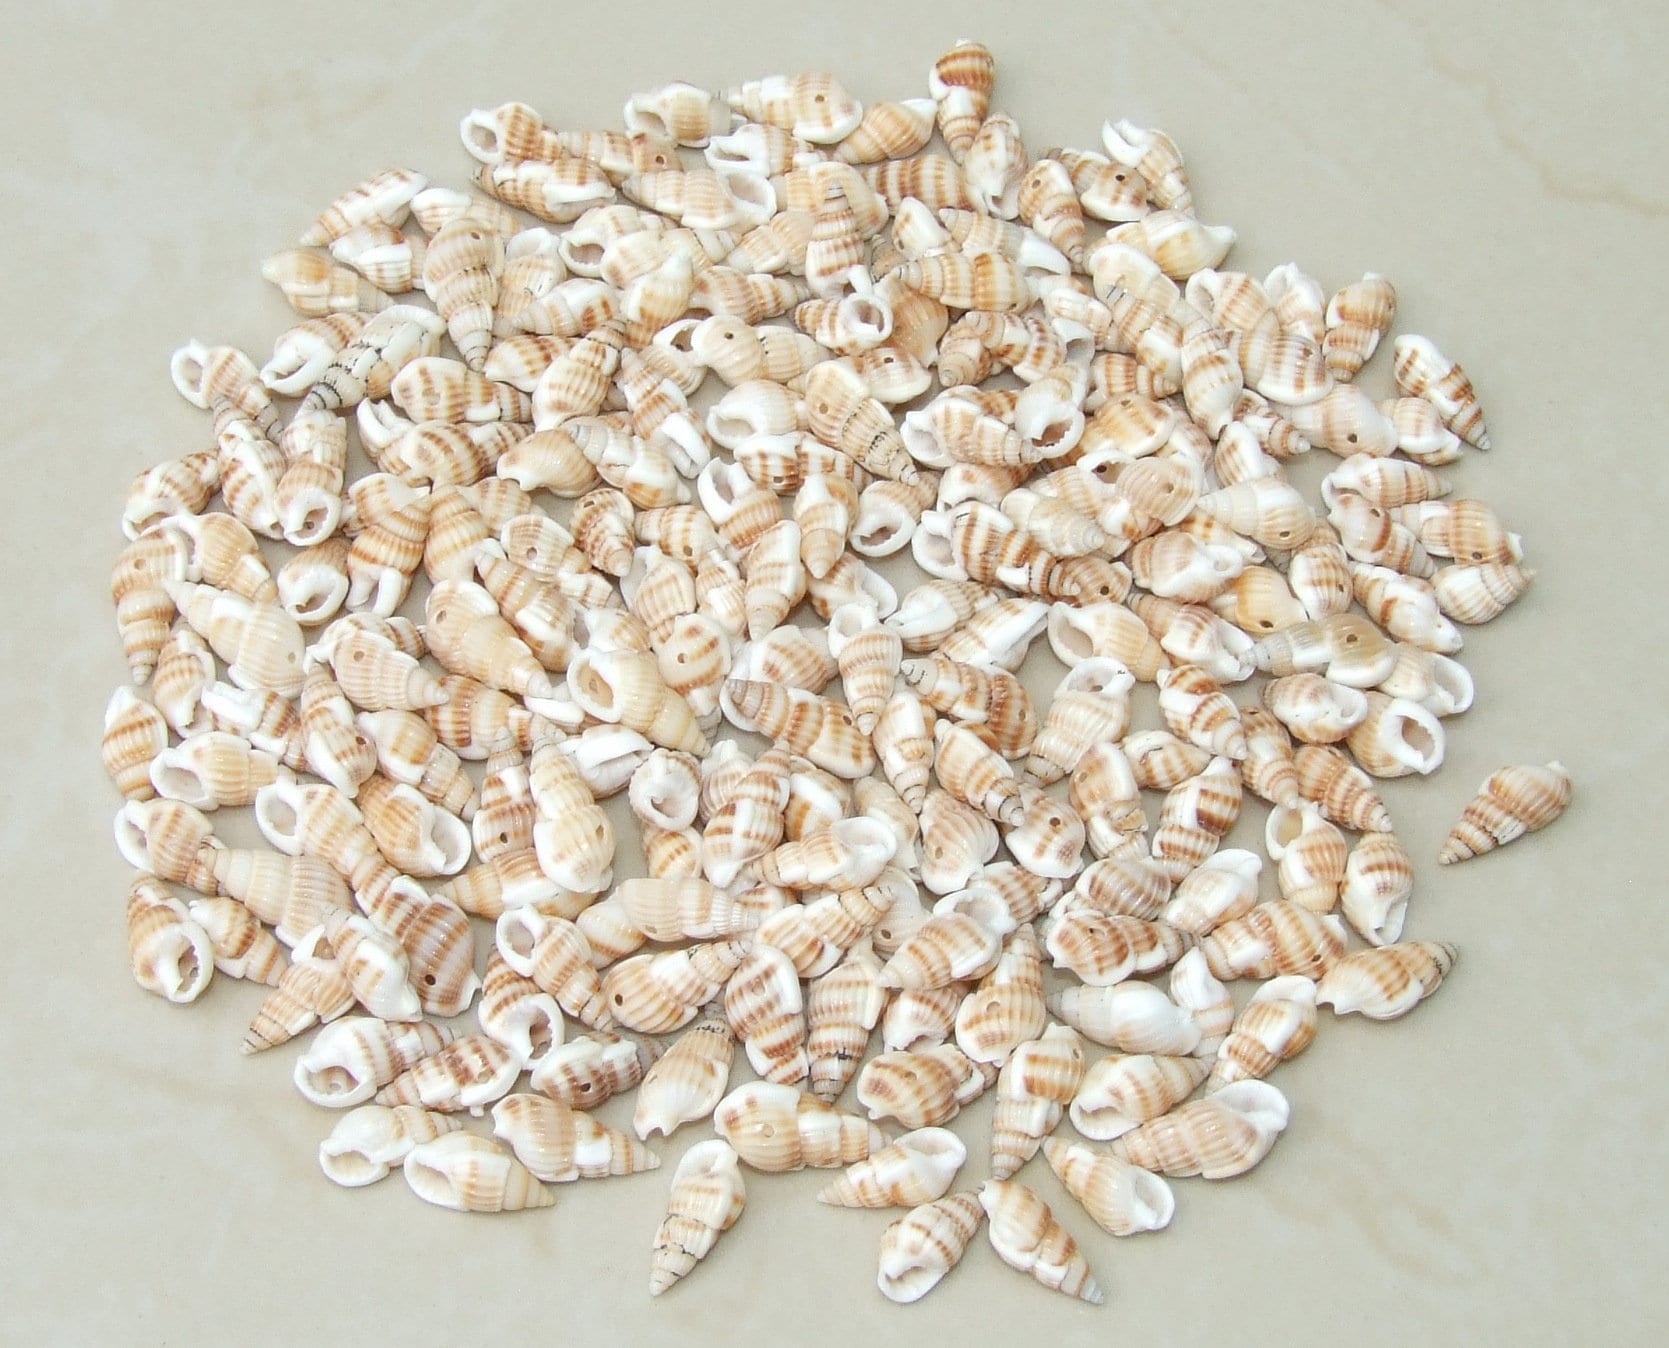 50 Small Natural Spiral Seashell, Spiral Sea Shell Bead, Bulk Shell, Beach Decor, Craft Shells, Seashell Jewelry, 15-20mm, 1mm Hole, 11-04